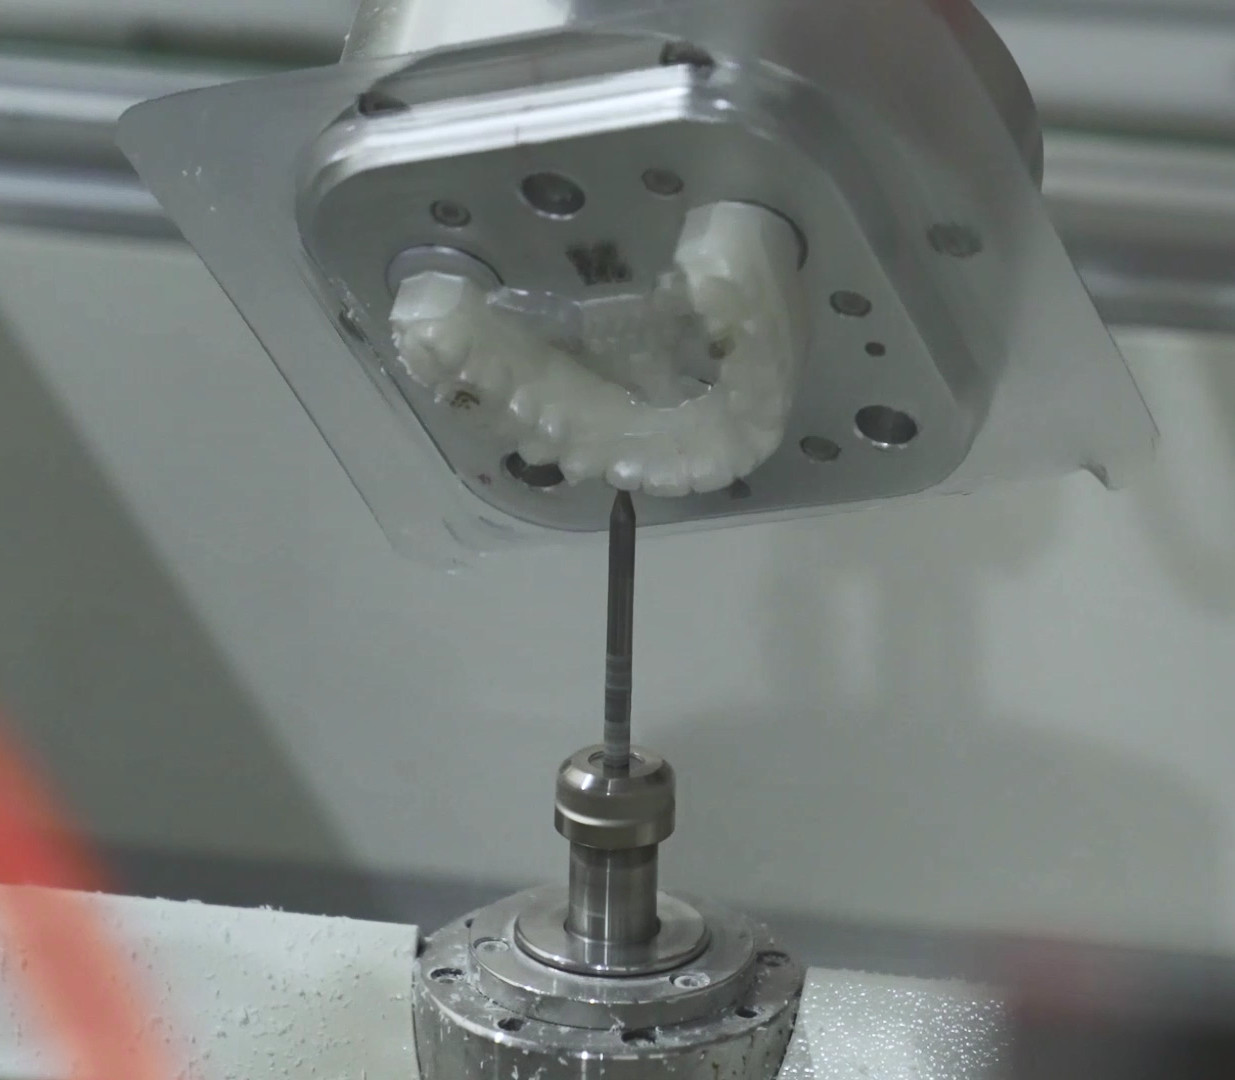  Industrial ACTA-B Aligners Trimming Machine Prismlab Invisible Braces Cutting Machine Manufactures